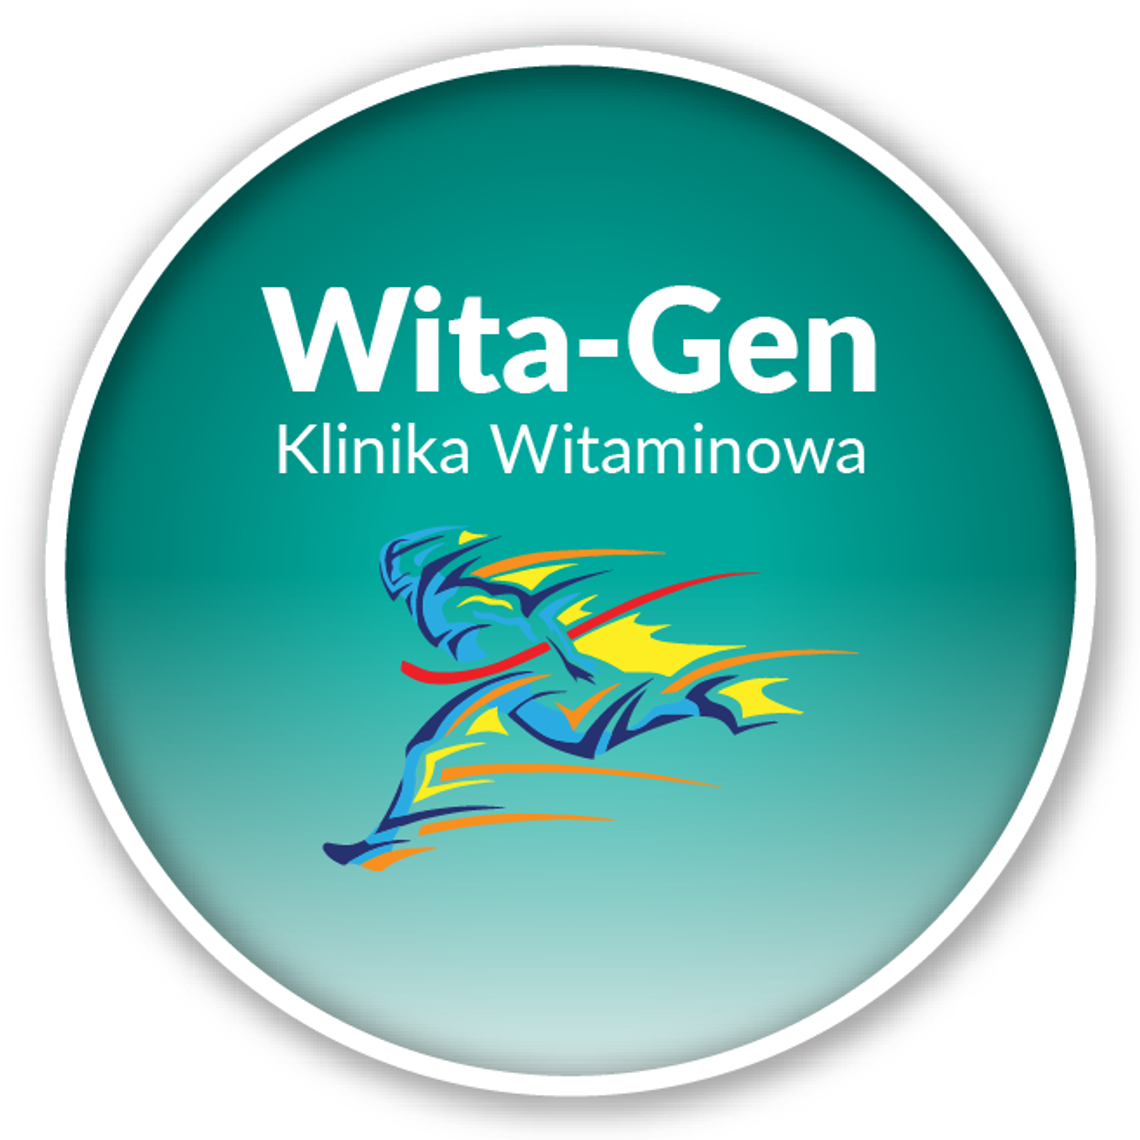 Wita-Gen Klinika Witaminowa